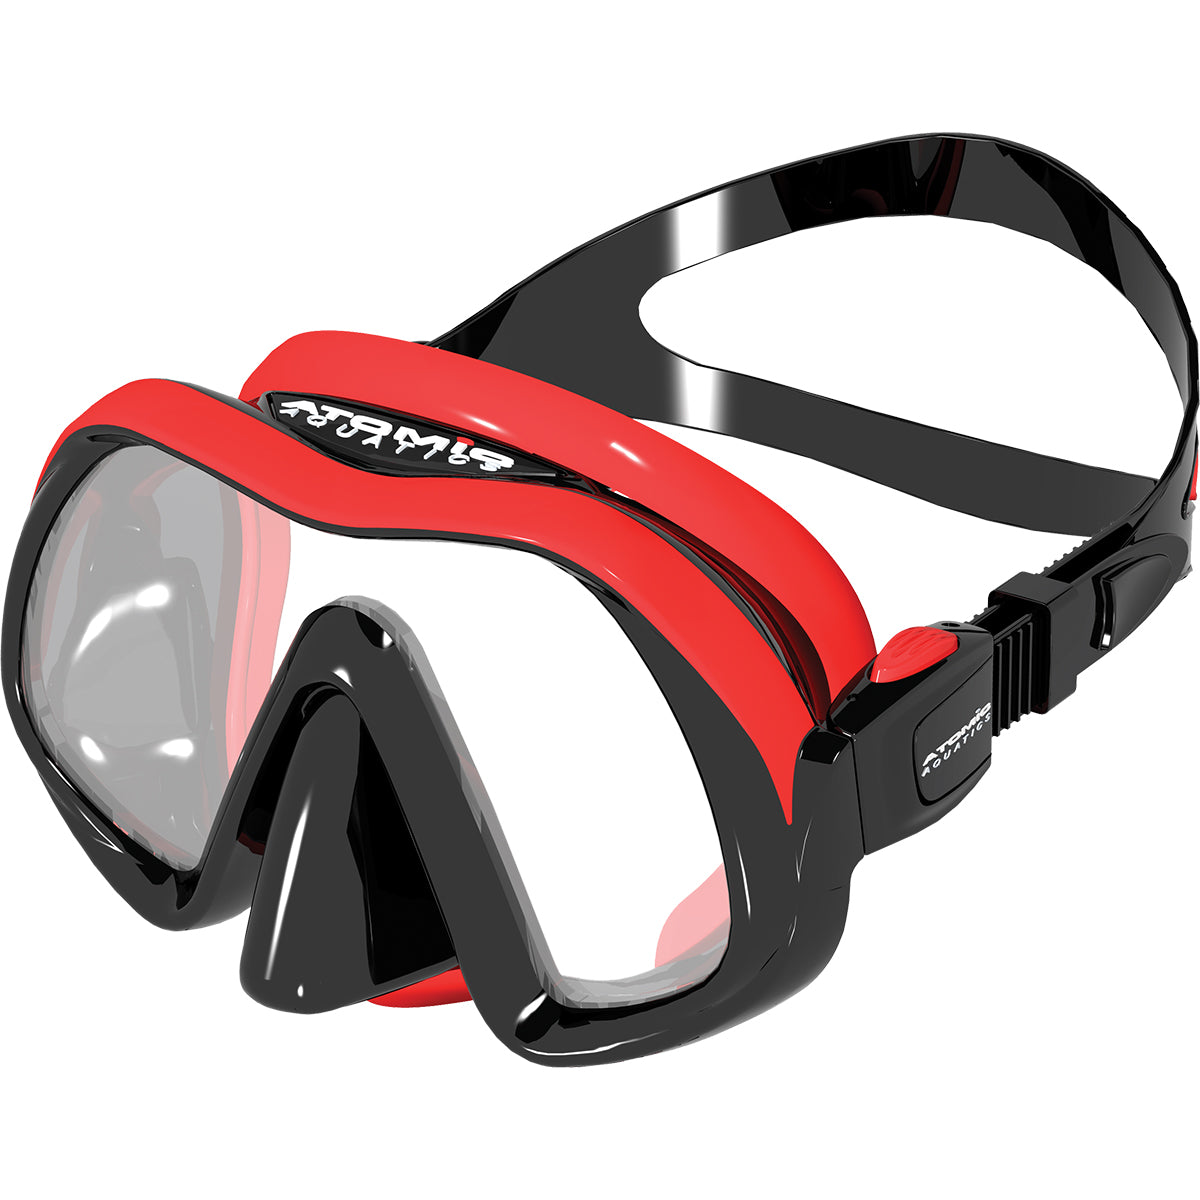 Venom Frameless Mask-wetsuit, diver, sharkskin, snorkeling gear, watersports equipment, diving fins, snorkeling mask, ocean reef, Garmin G1